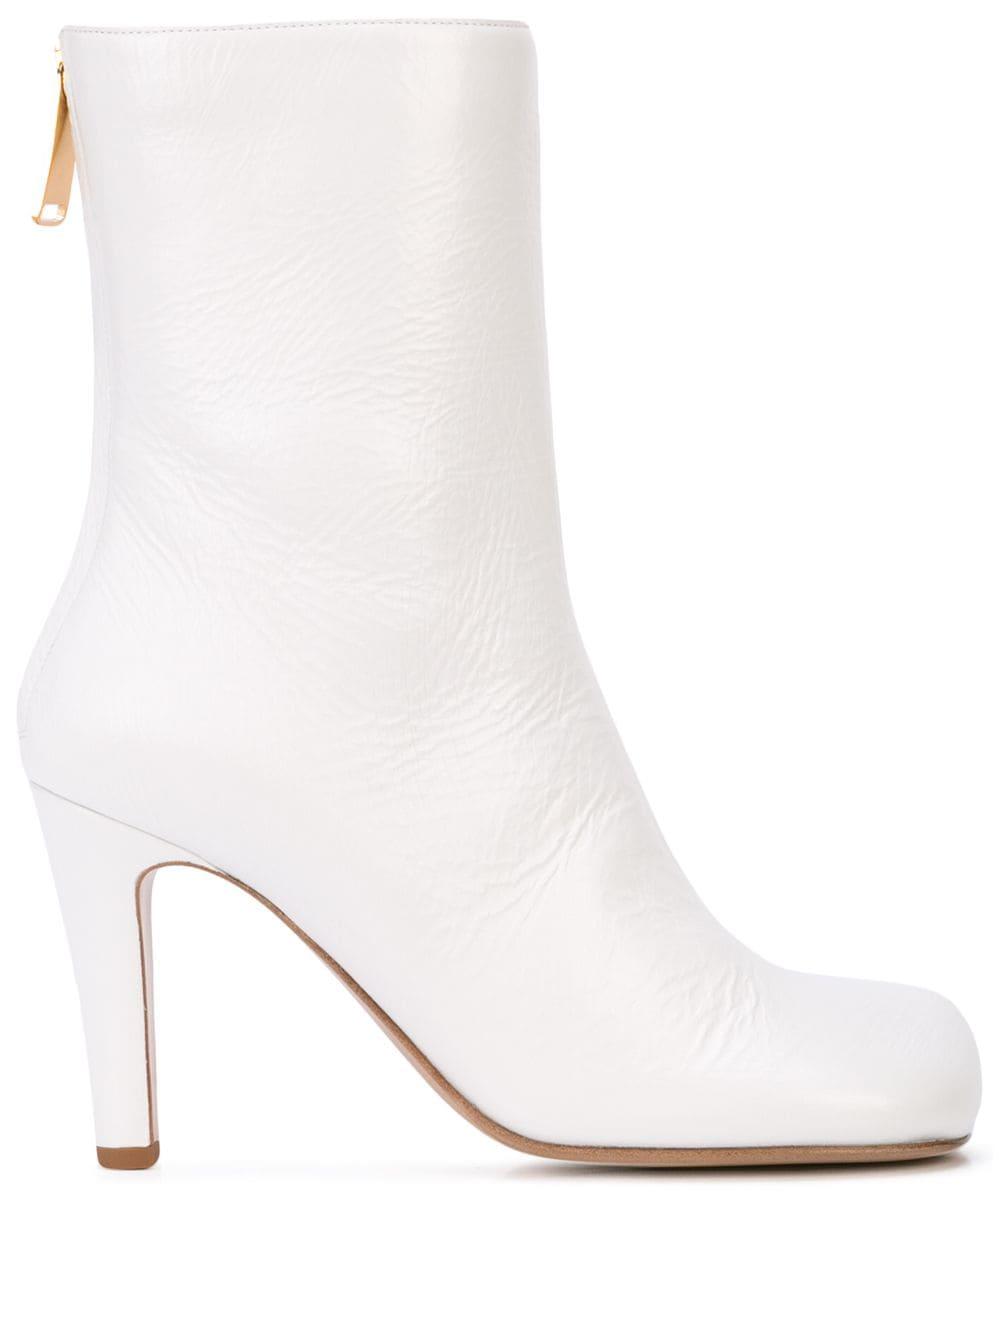 Bottega Veneta Bloc Boots in White | Lyst